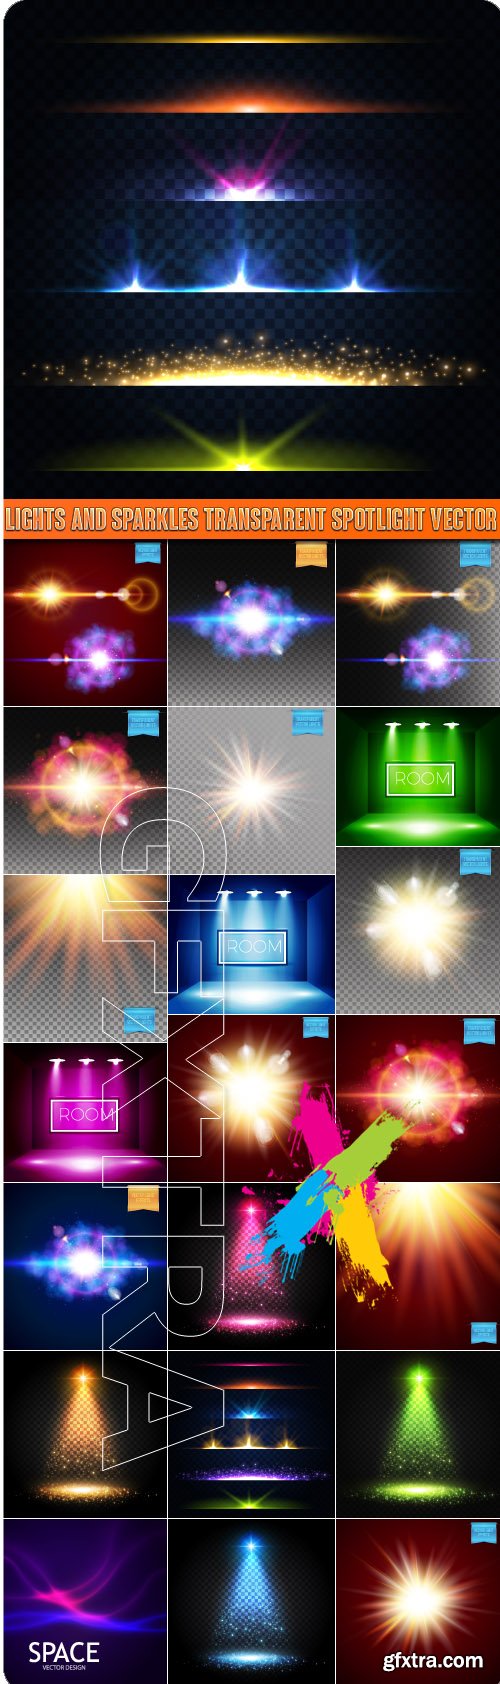 Lights and Sparkles Transparent Spotlight vector